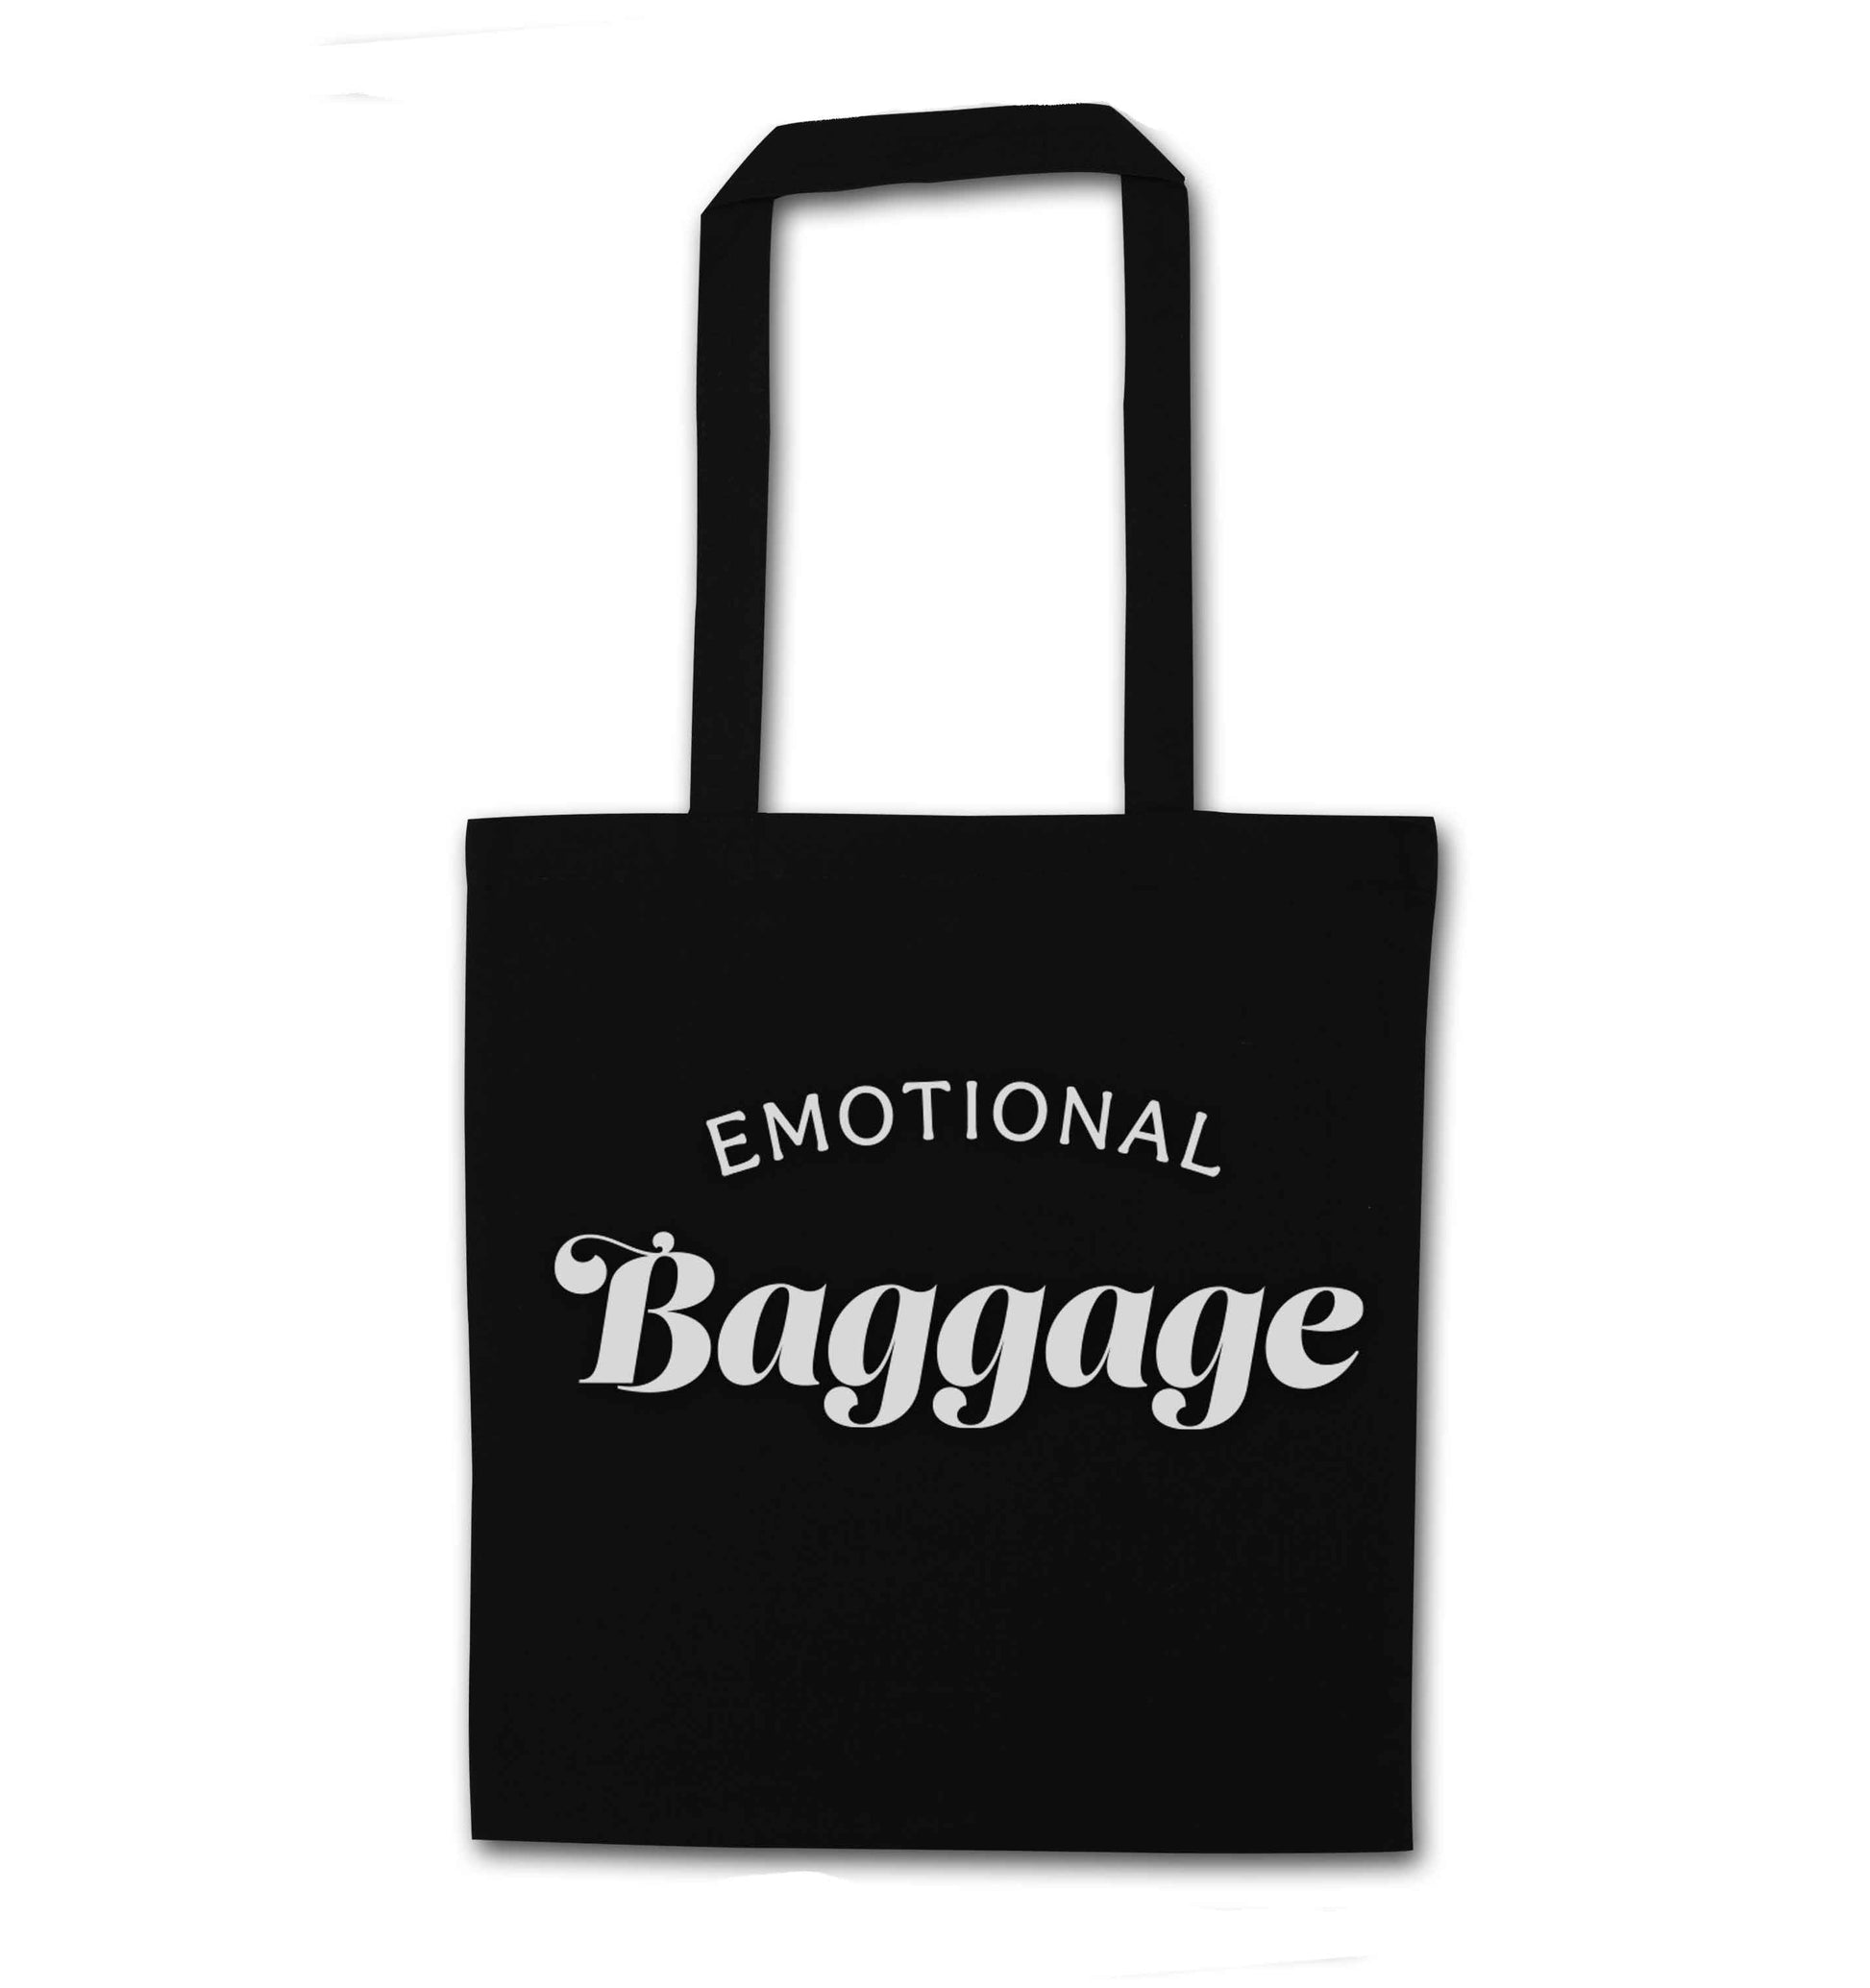 Emotional baggage black tote bag